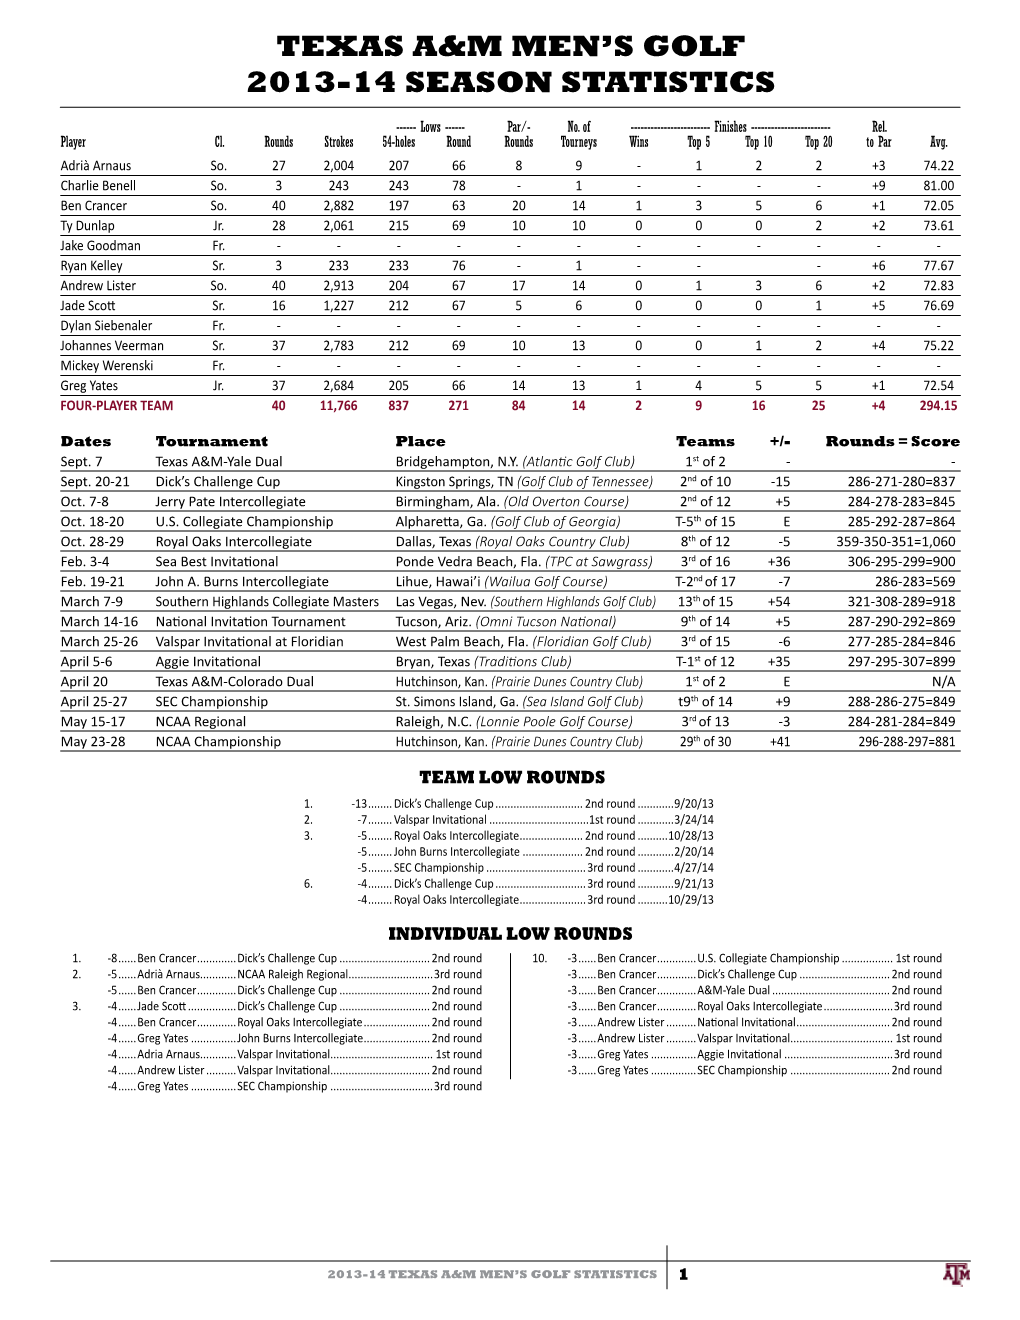 Texas A&M Men's Golf 2013-14 Season Statistics